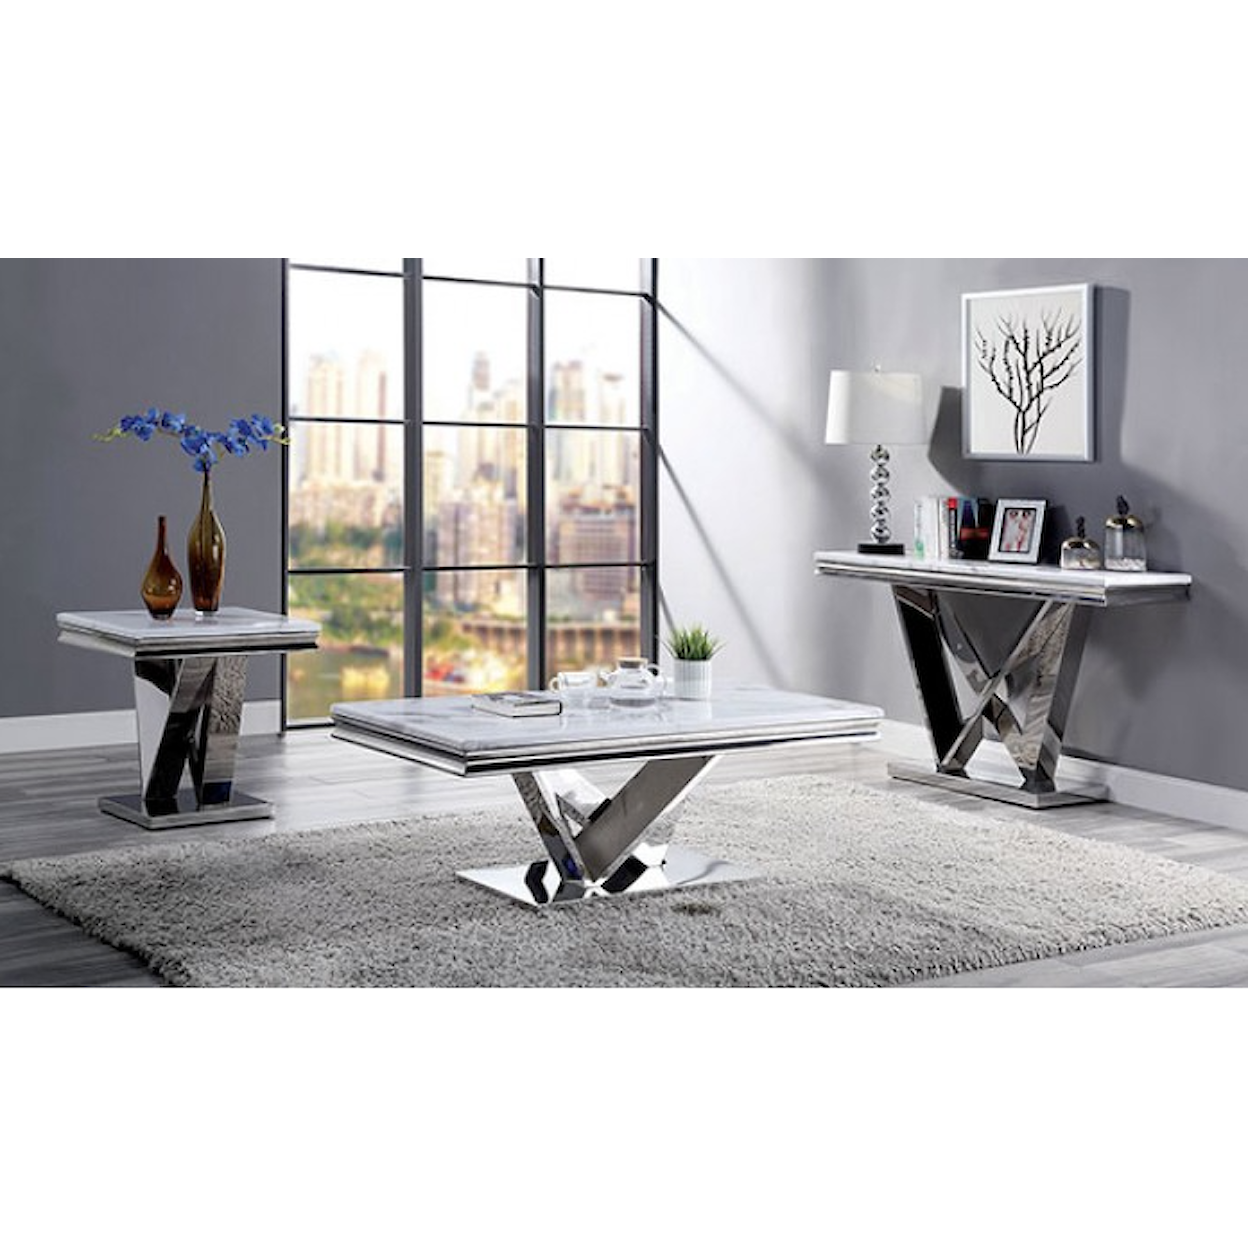 Furniture of America Villarsglane End Table